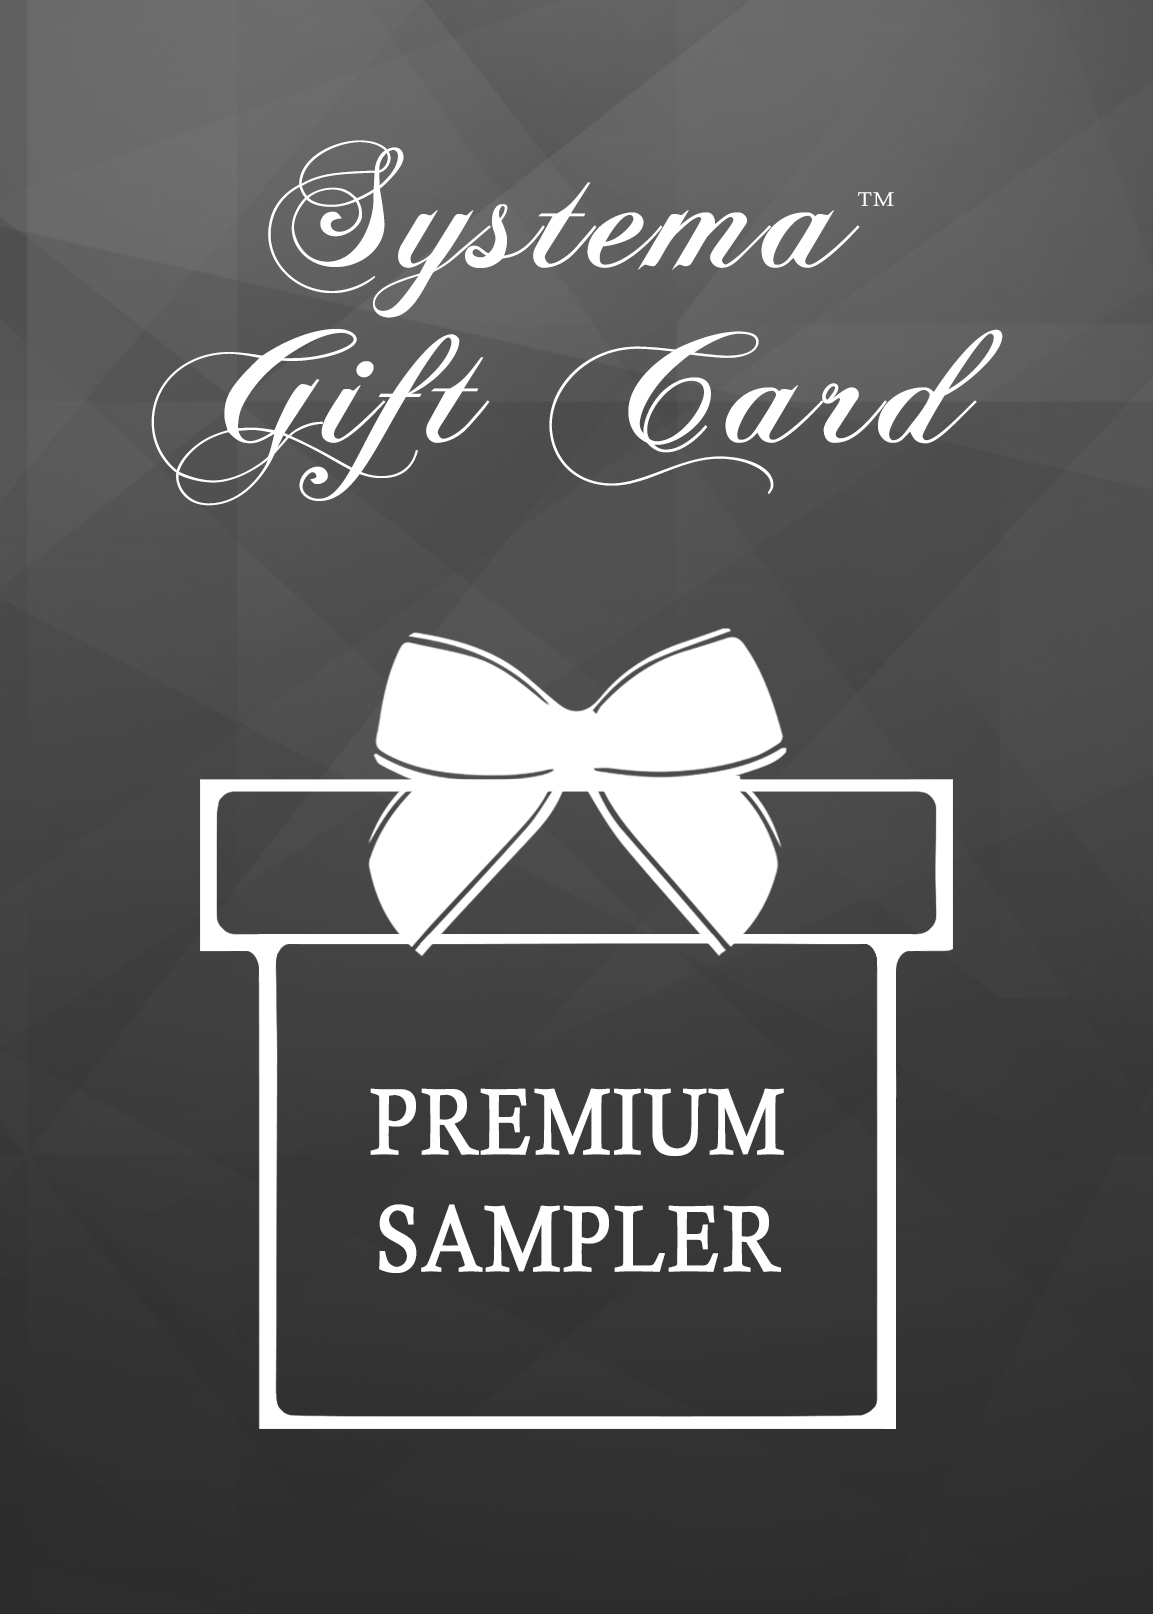 Premium Sampler